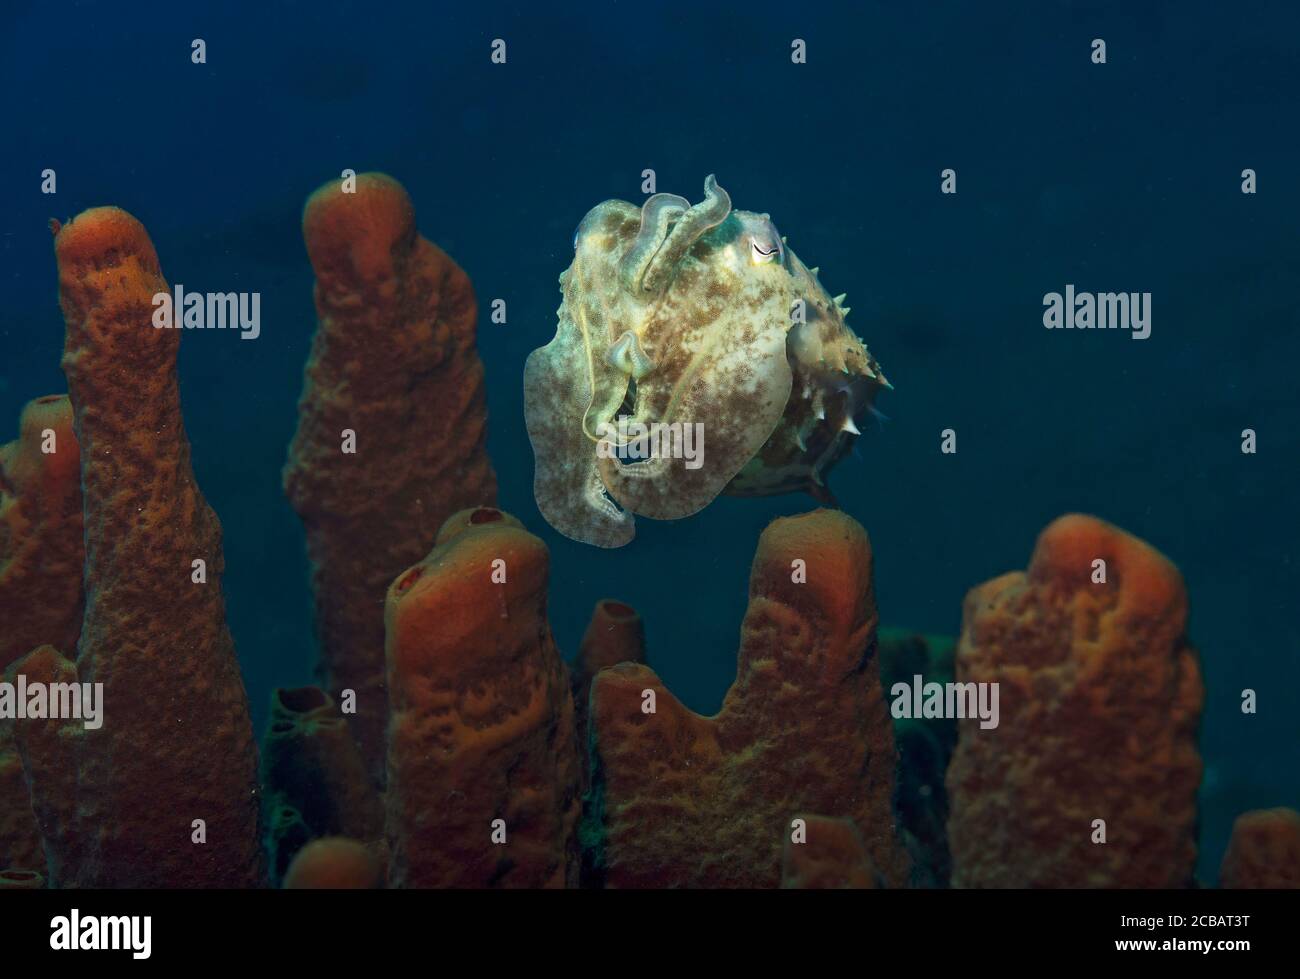 Broadclub cuttlefish, Sepia latimanus, hidding behind sponge, Tulamben, Bali, Indonesia Stock Photo